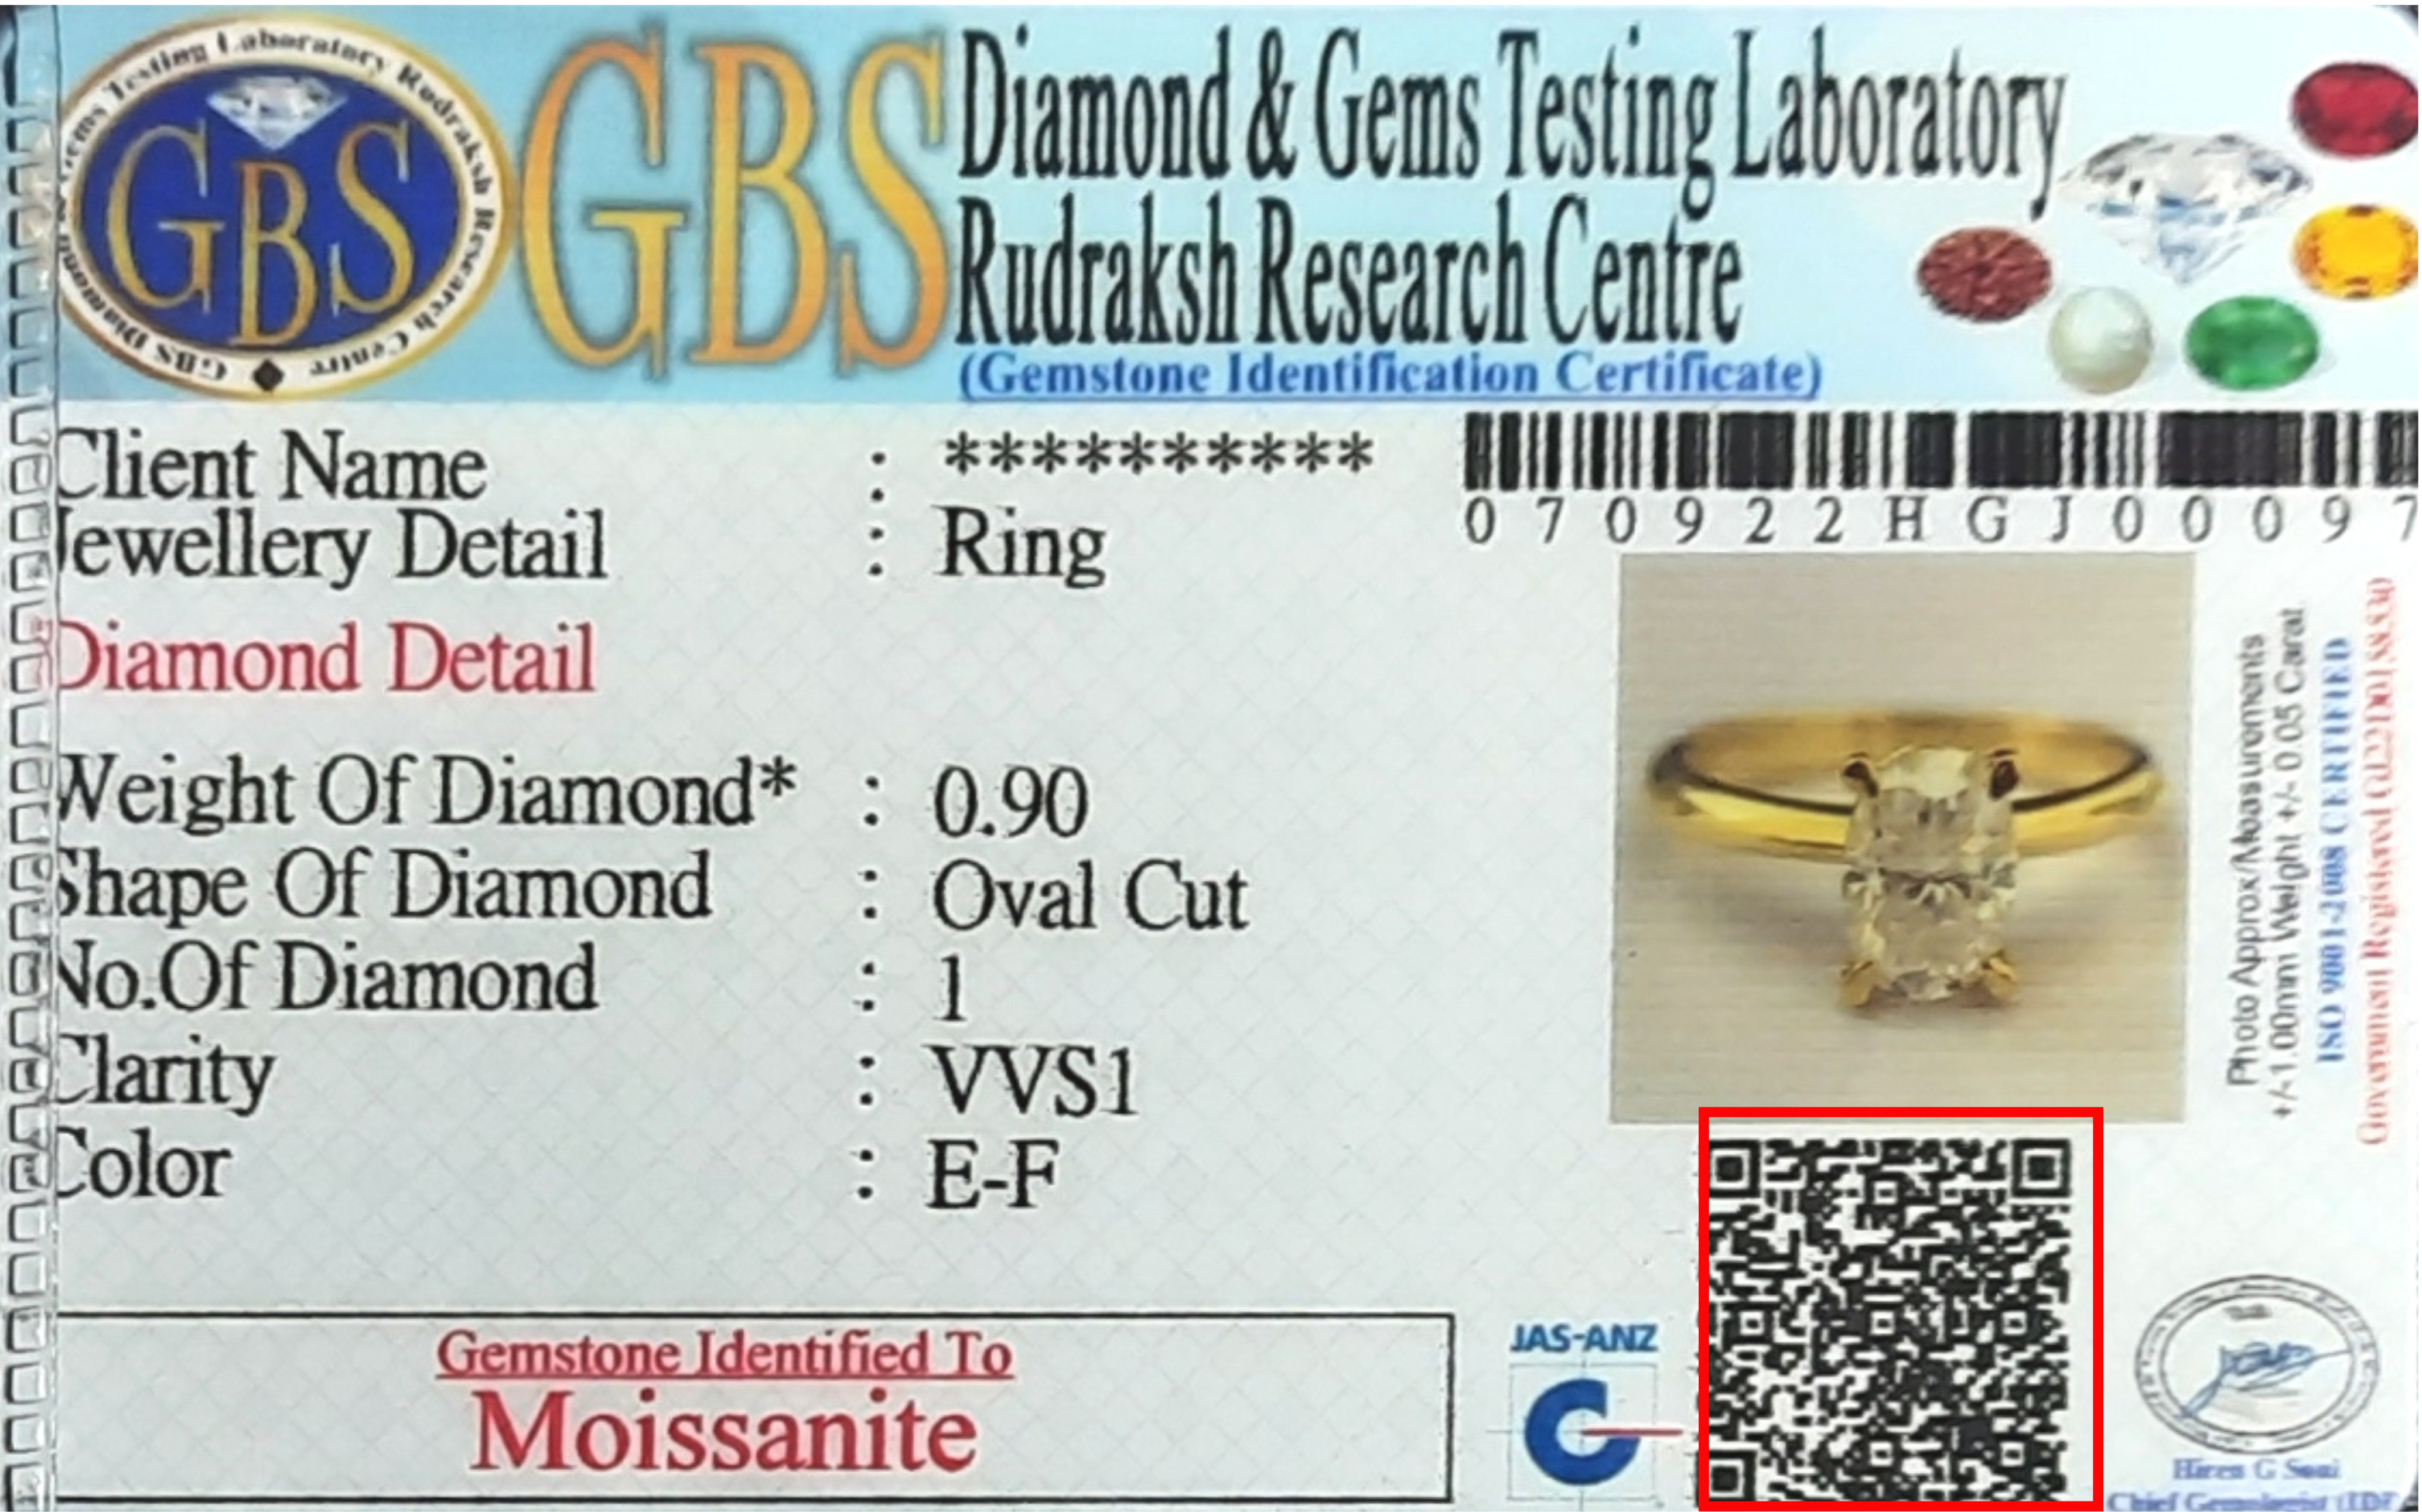 GBS Certificate